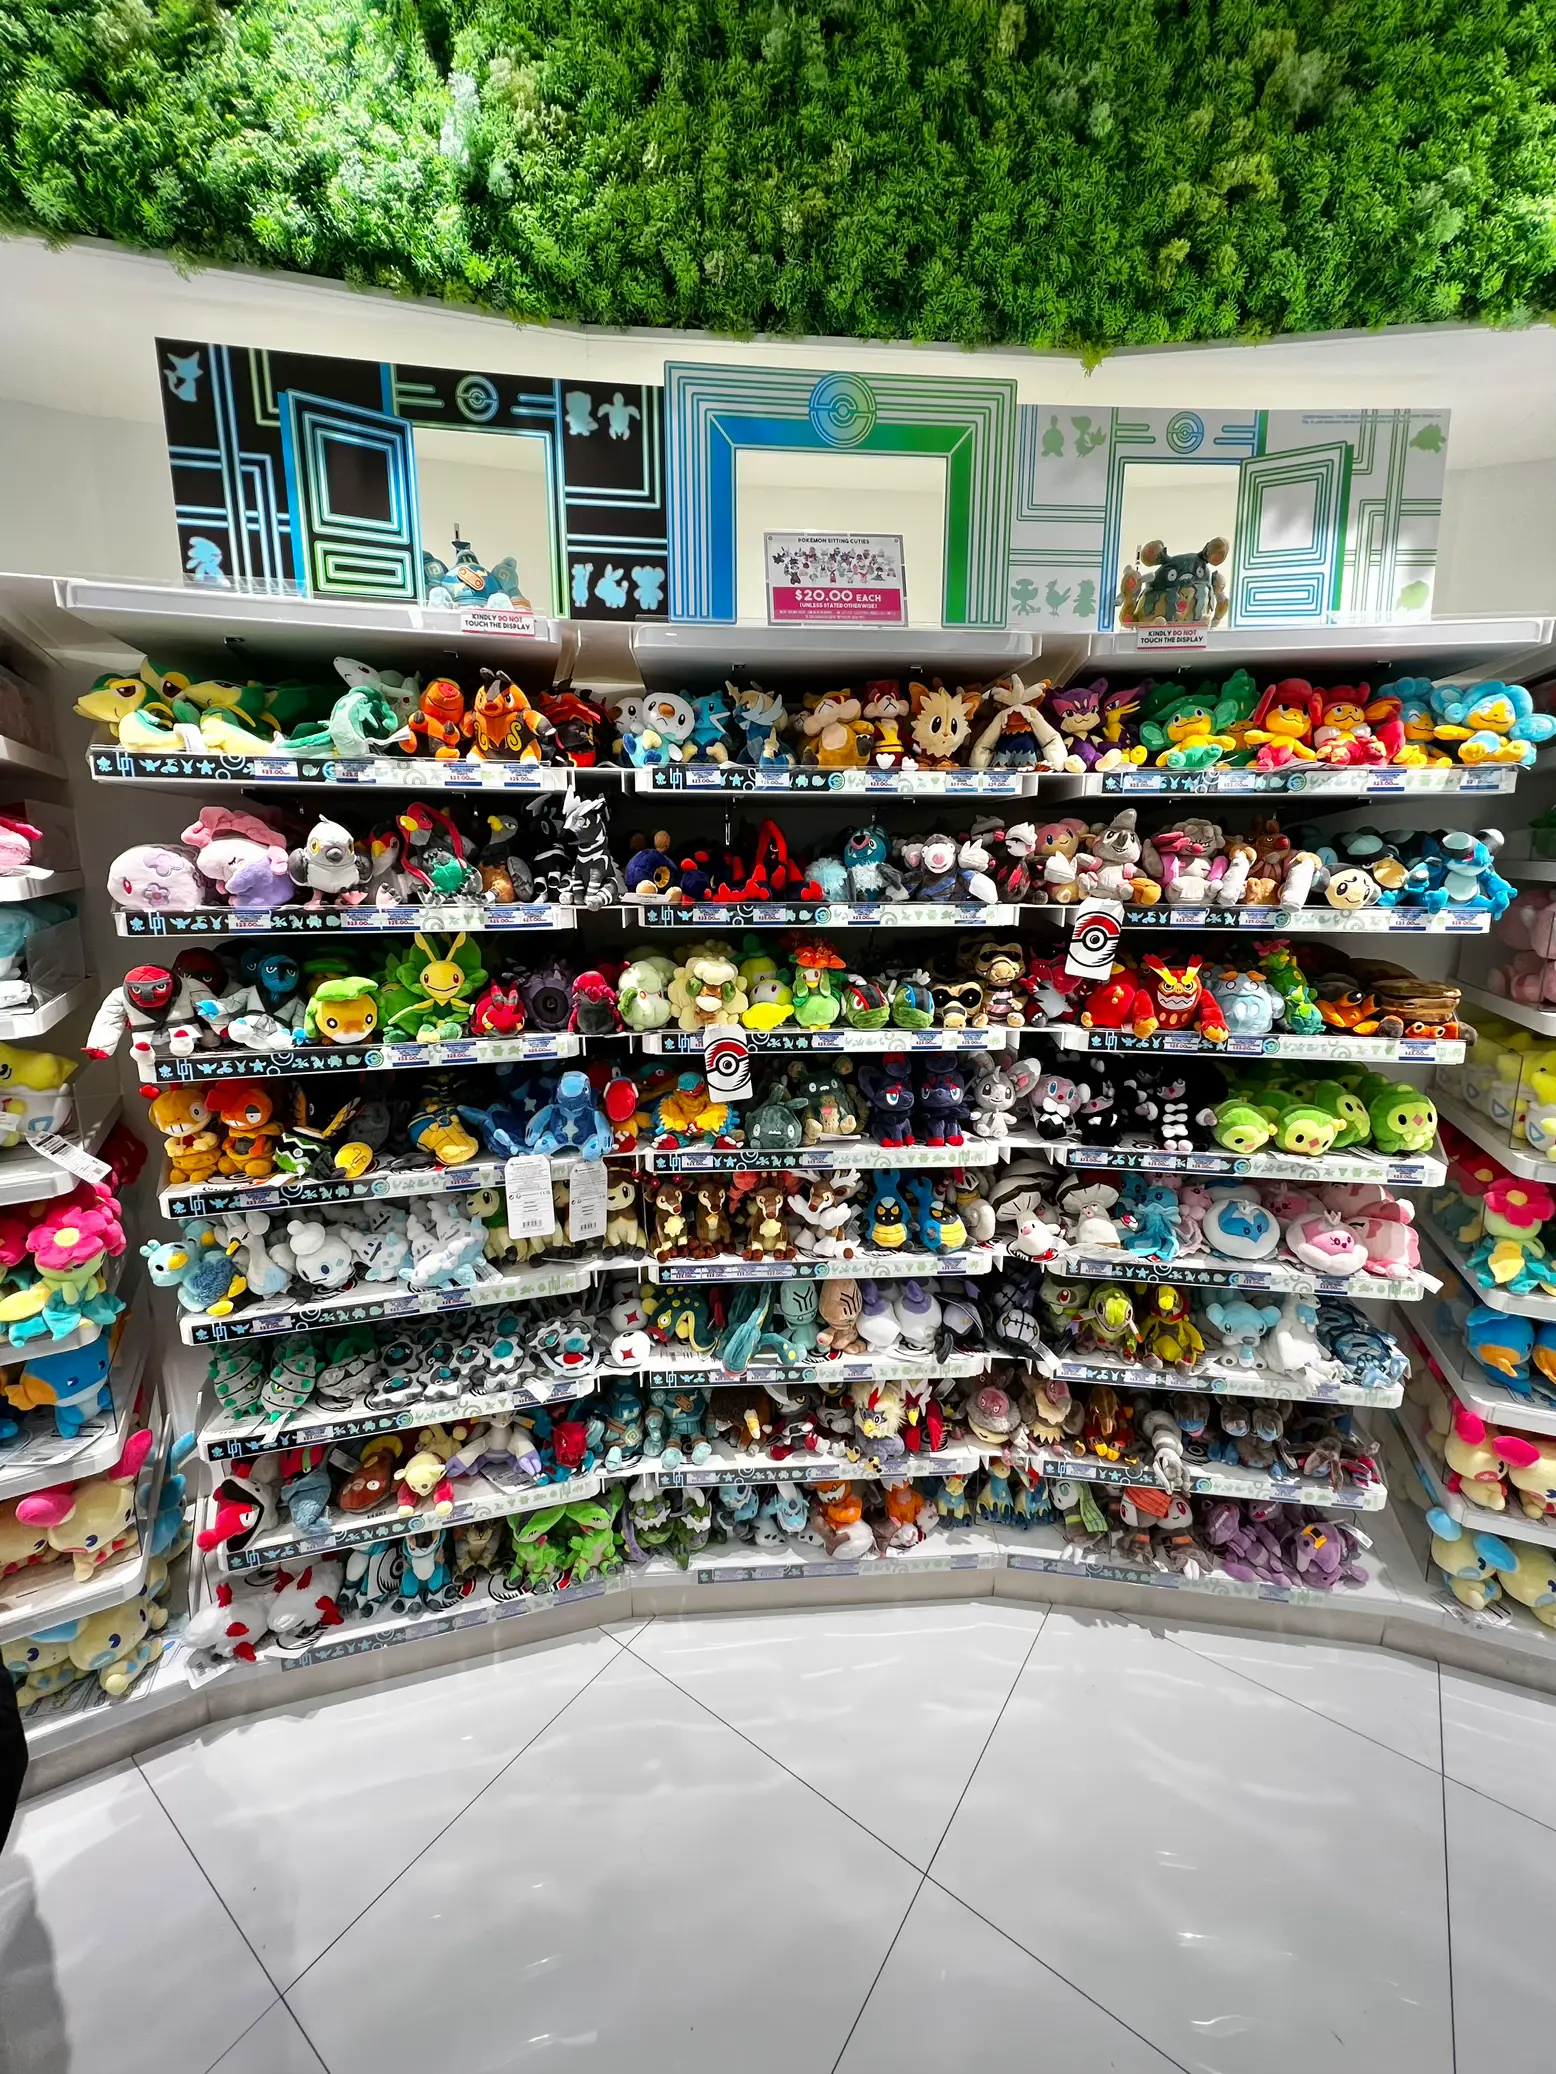 Pokemon Store Display